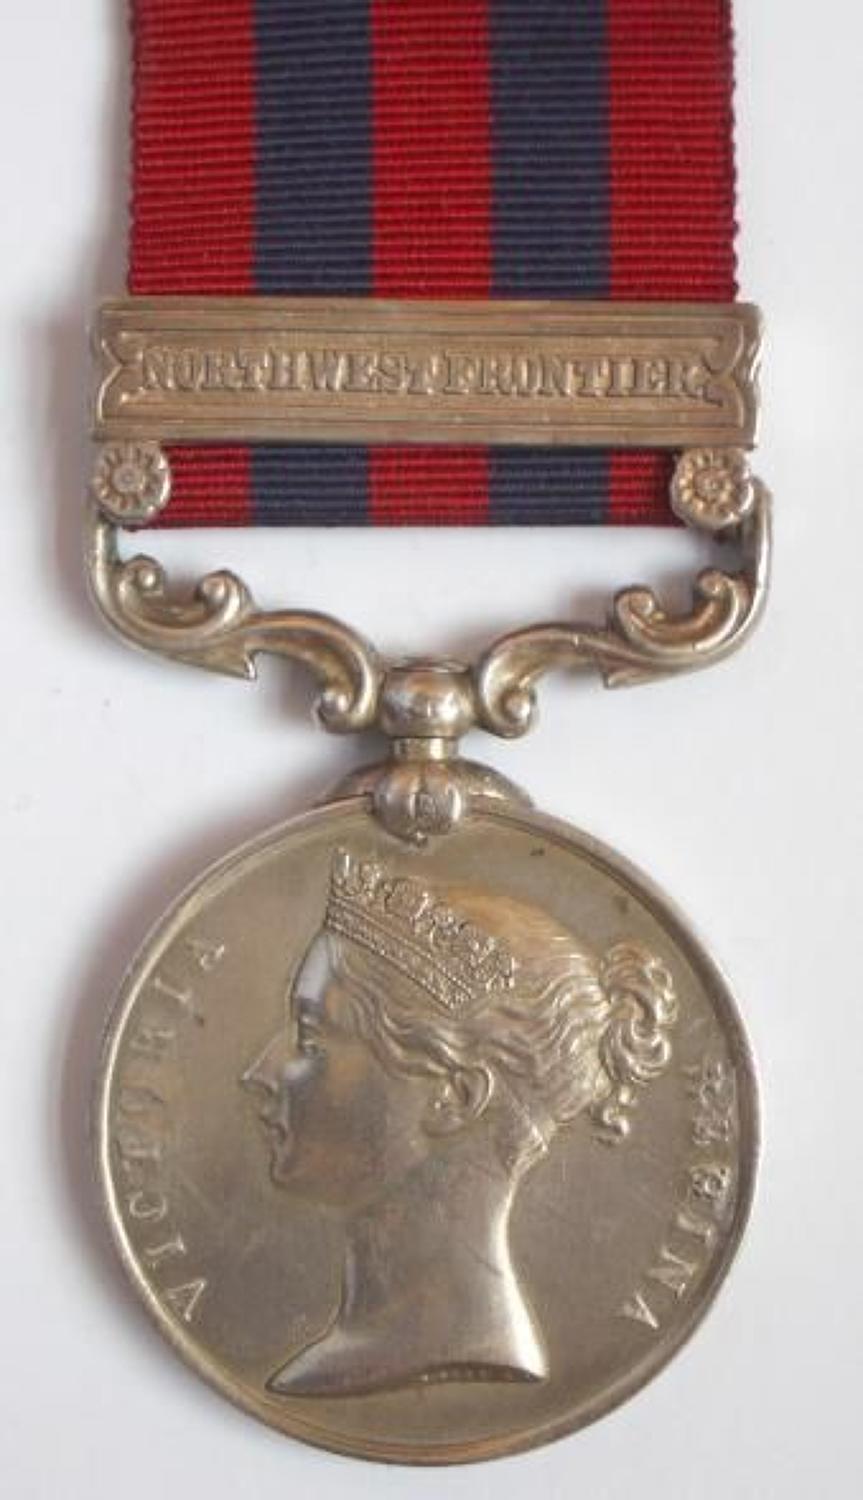 32nd Regiment India General Service Medal 1854, clasp “North West Fr